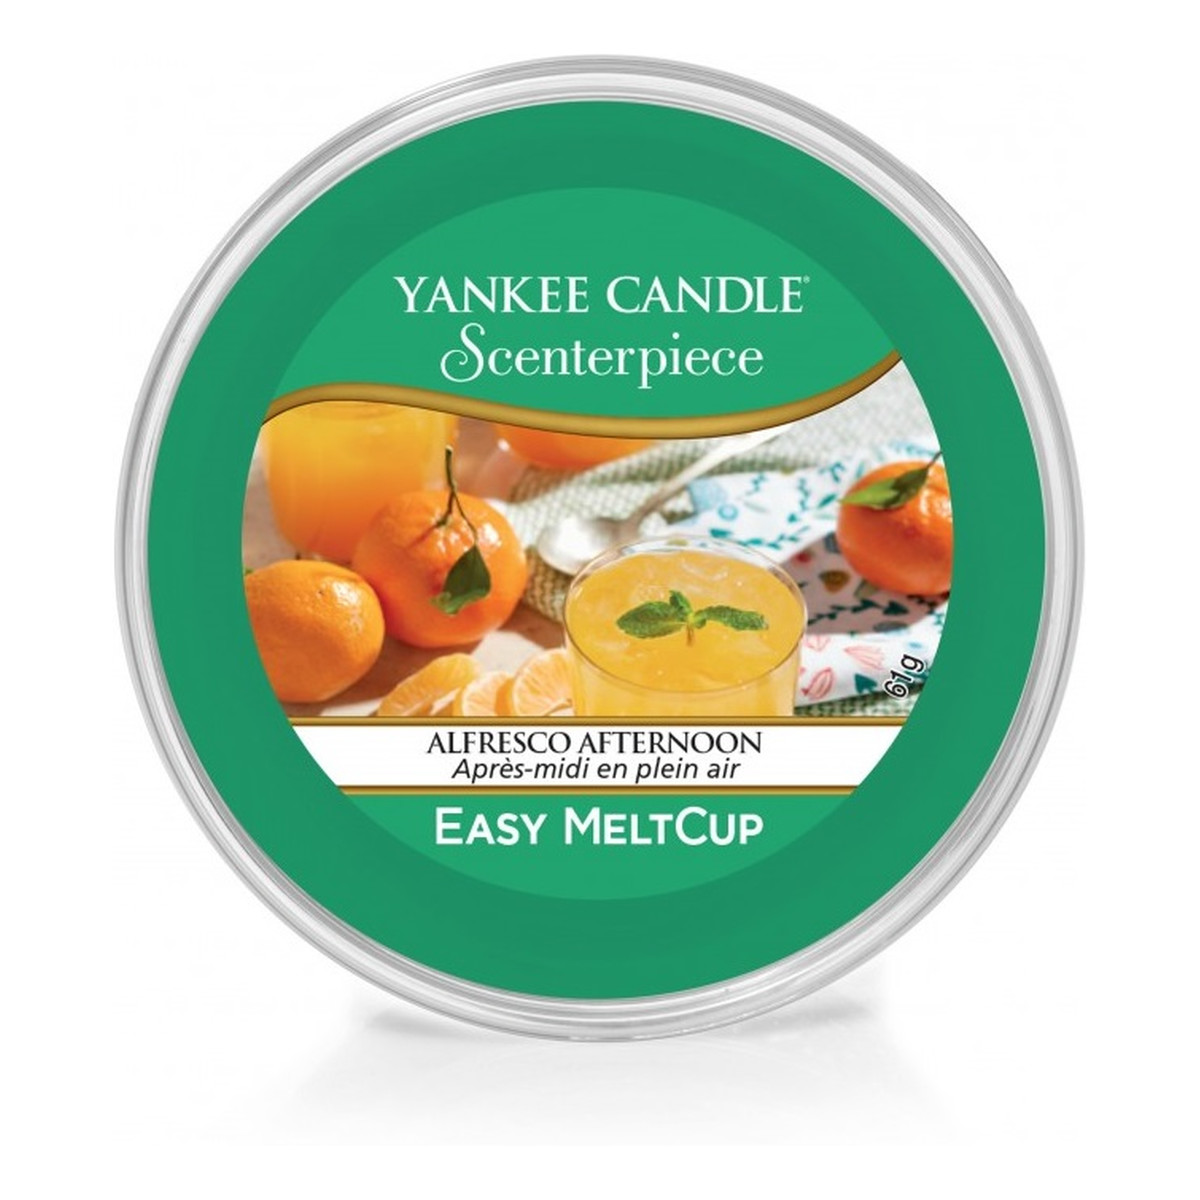 Yankee Candle Scenterpiece Easy Melt Cup wosk do elektrycznego kominka Alfresco Afternoon 61g